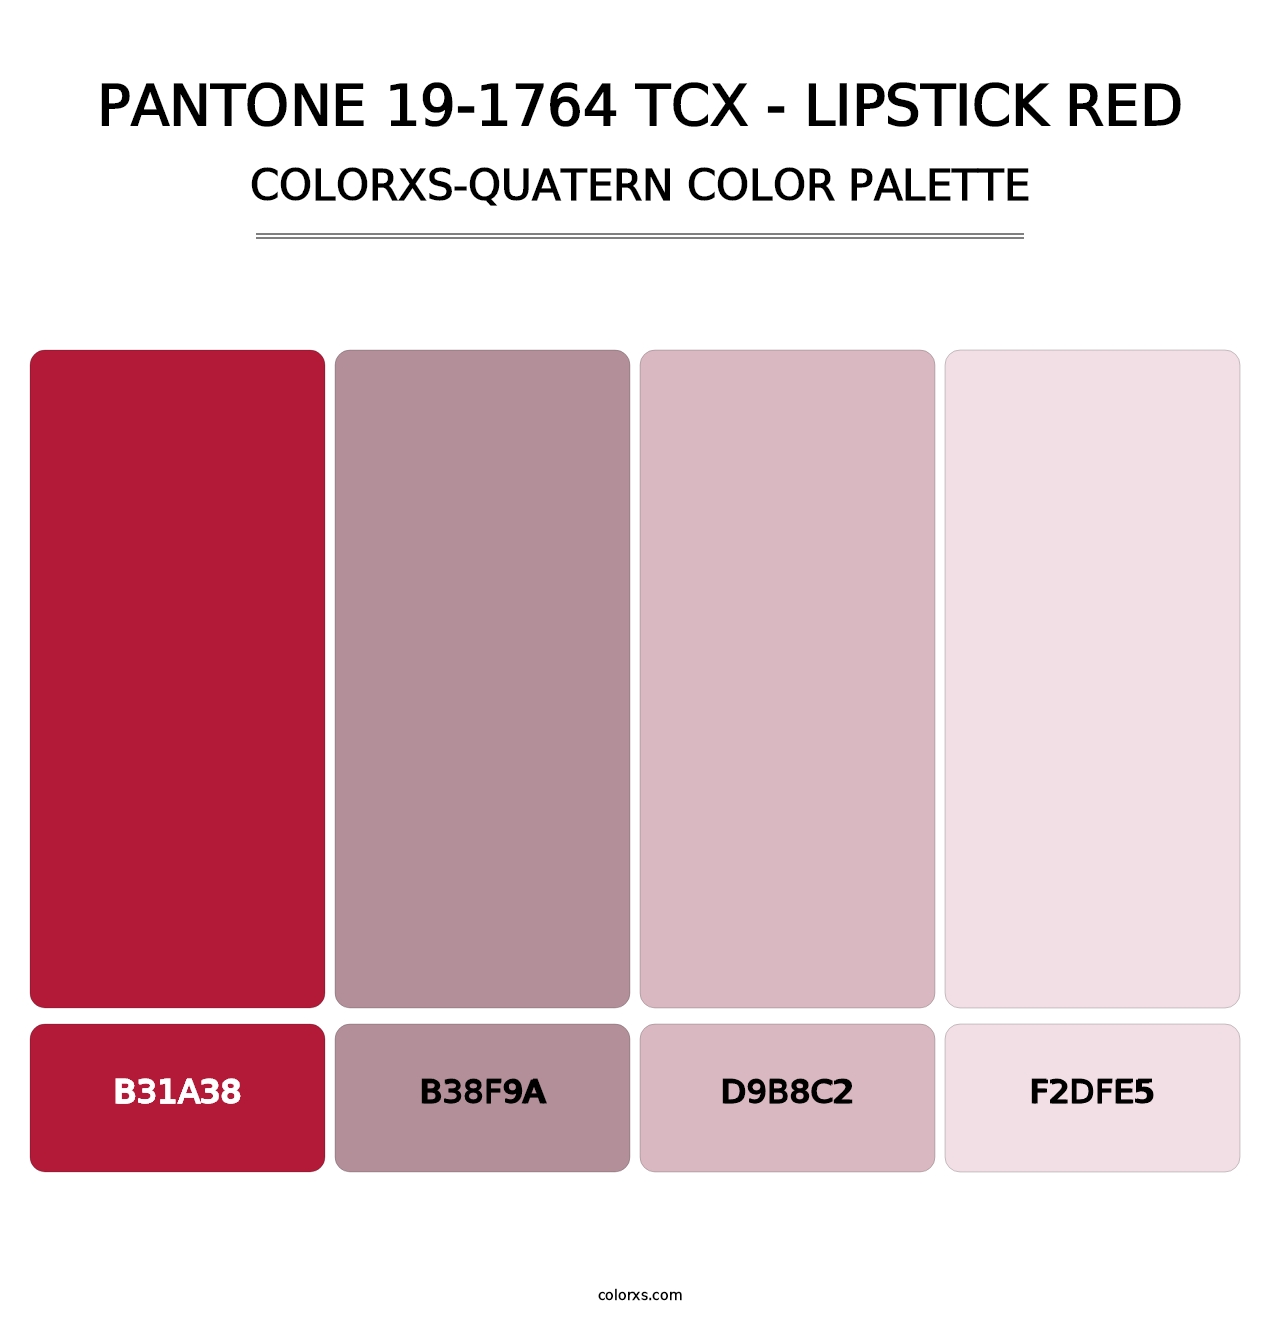 PANTONE 19-1764 TCX - Lipstick Red - Colorxs Quatern Palette